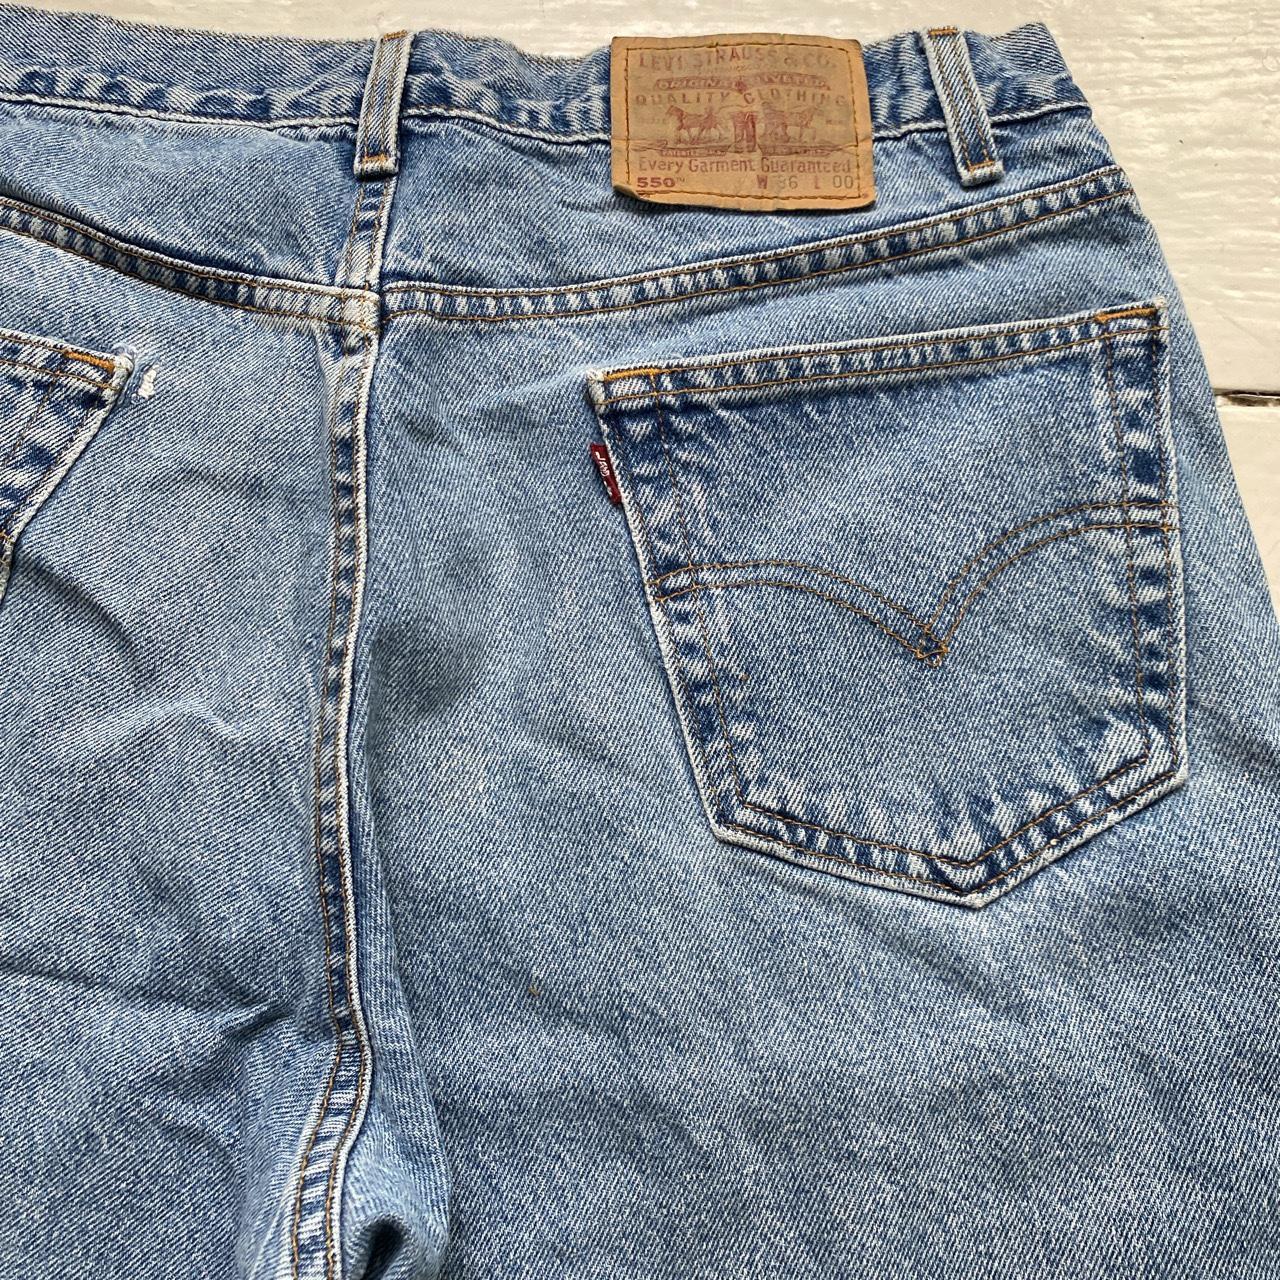 Levis 550 Vintage Baggy Jean Short Jorts